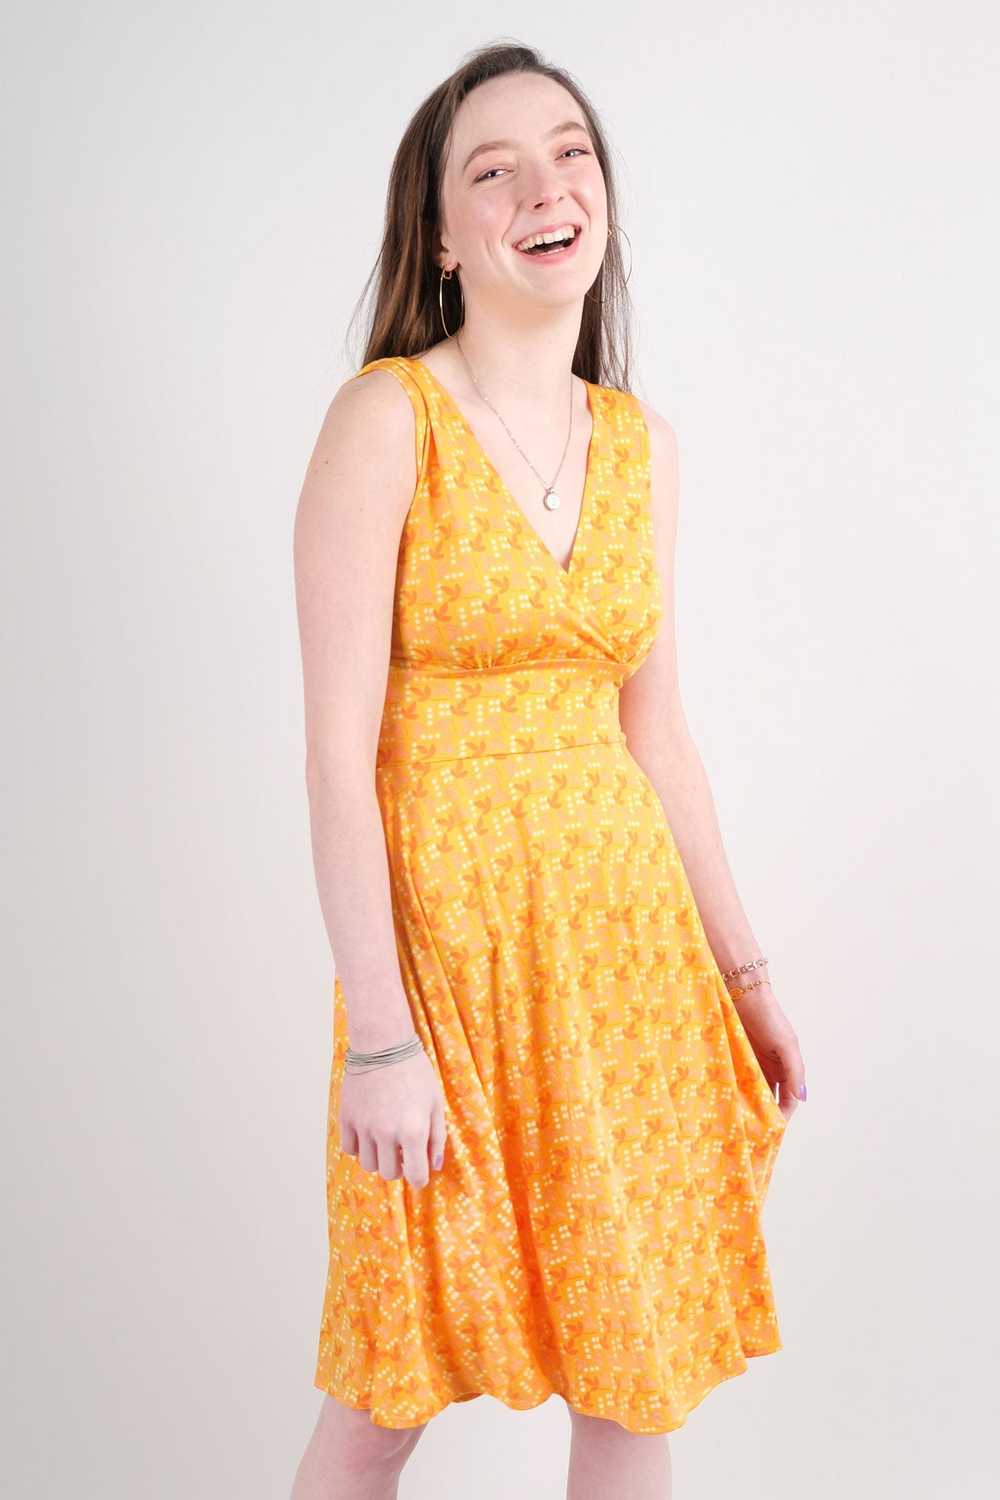 Karina Dresses Audrey Dress - Orange You Beautiful - image 5